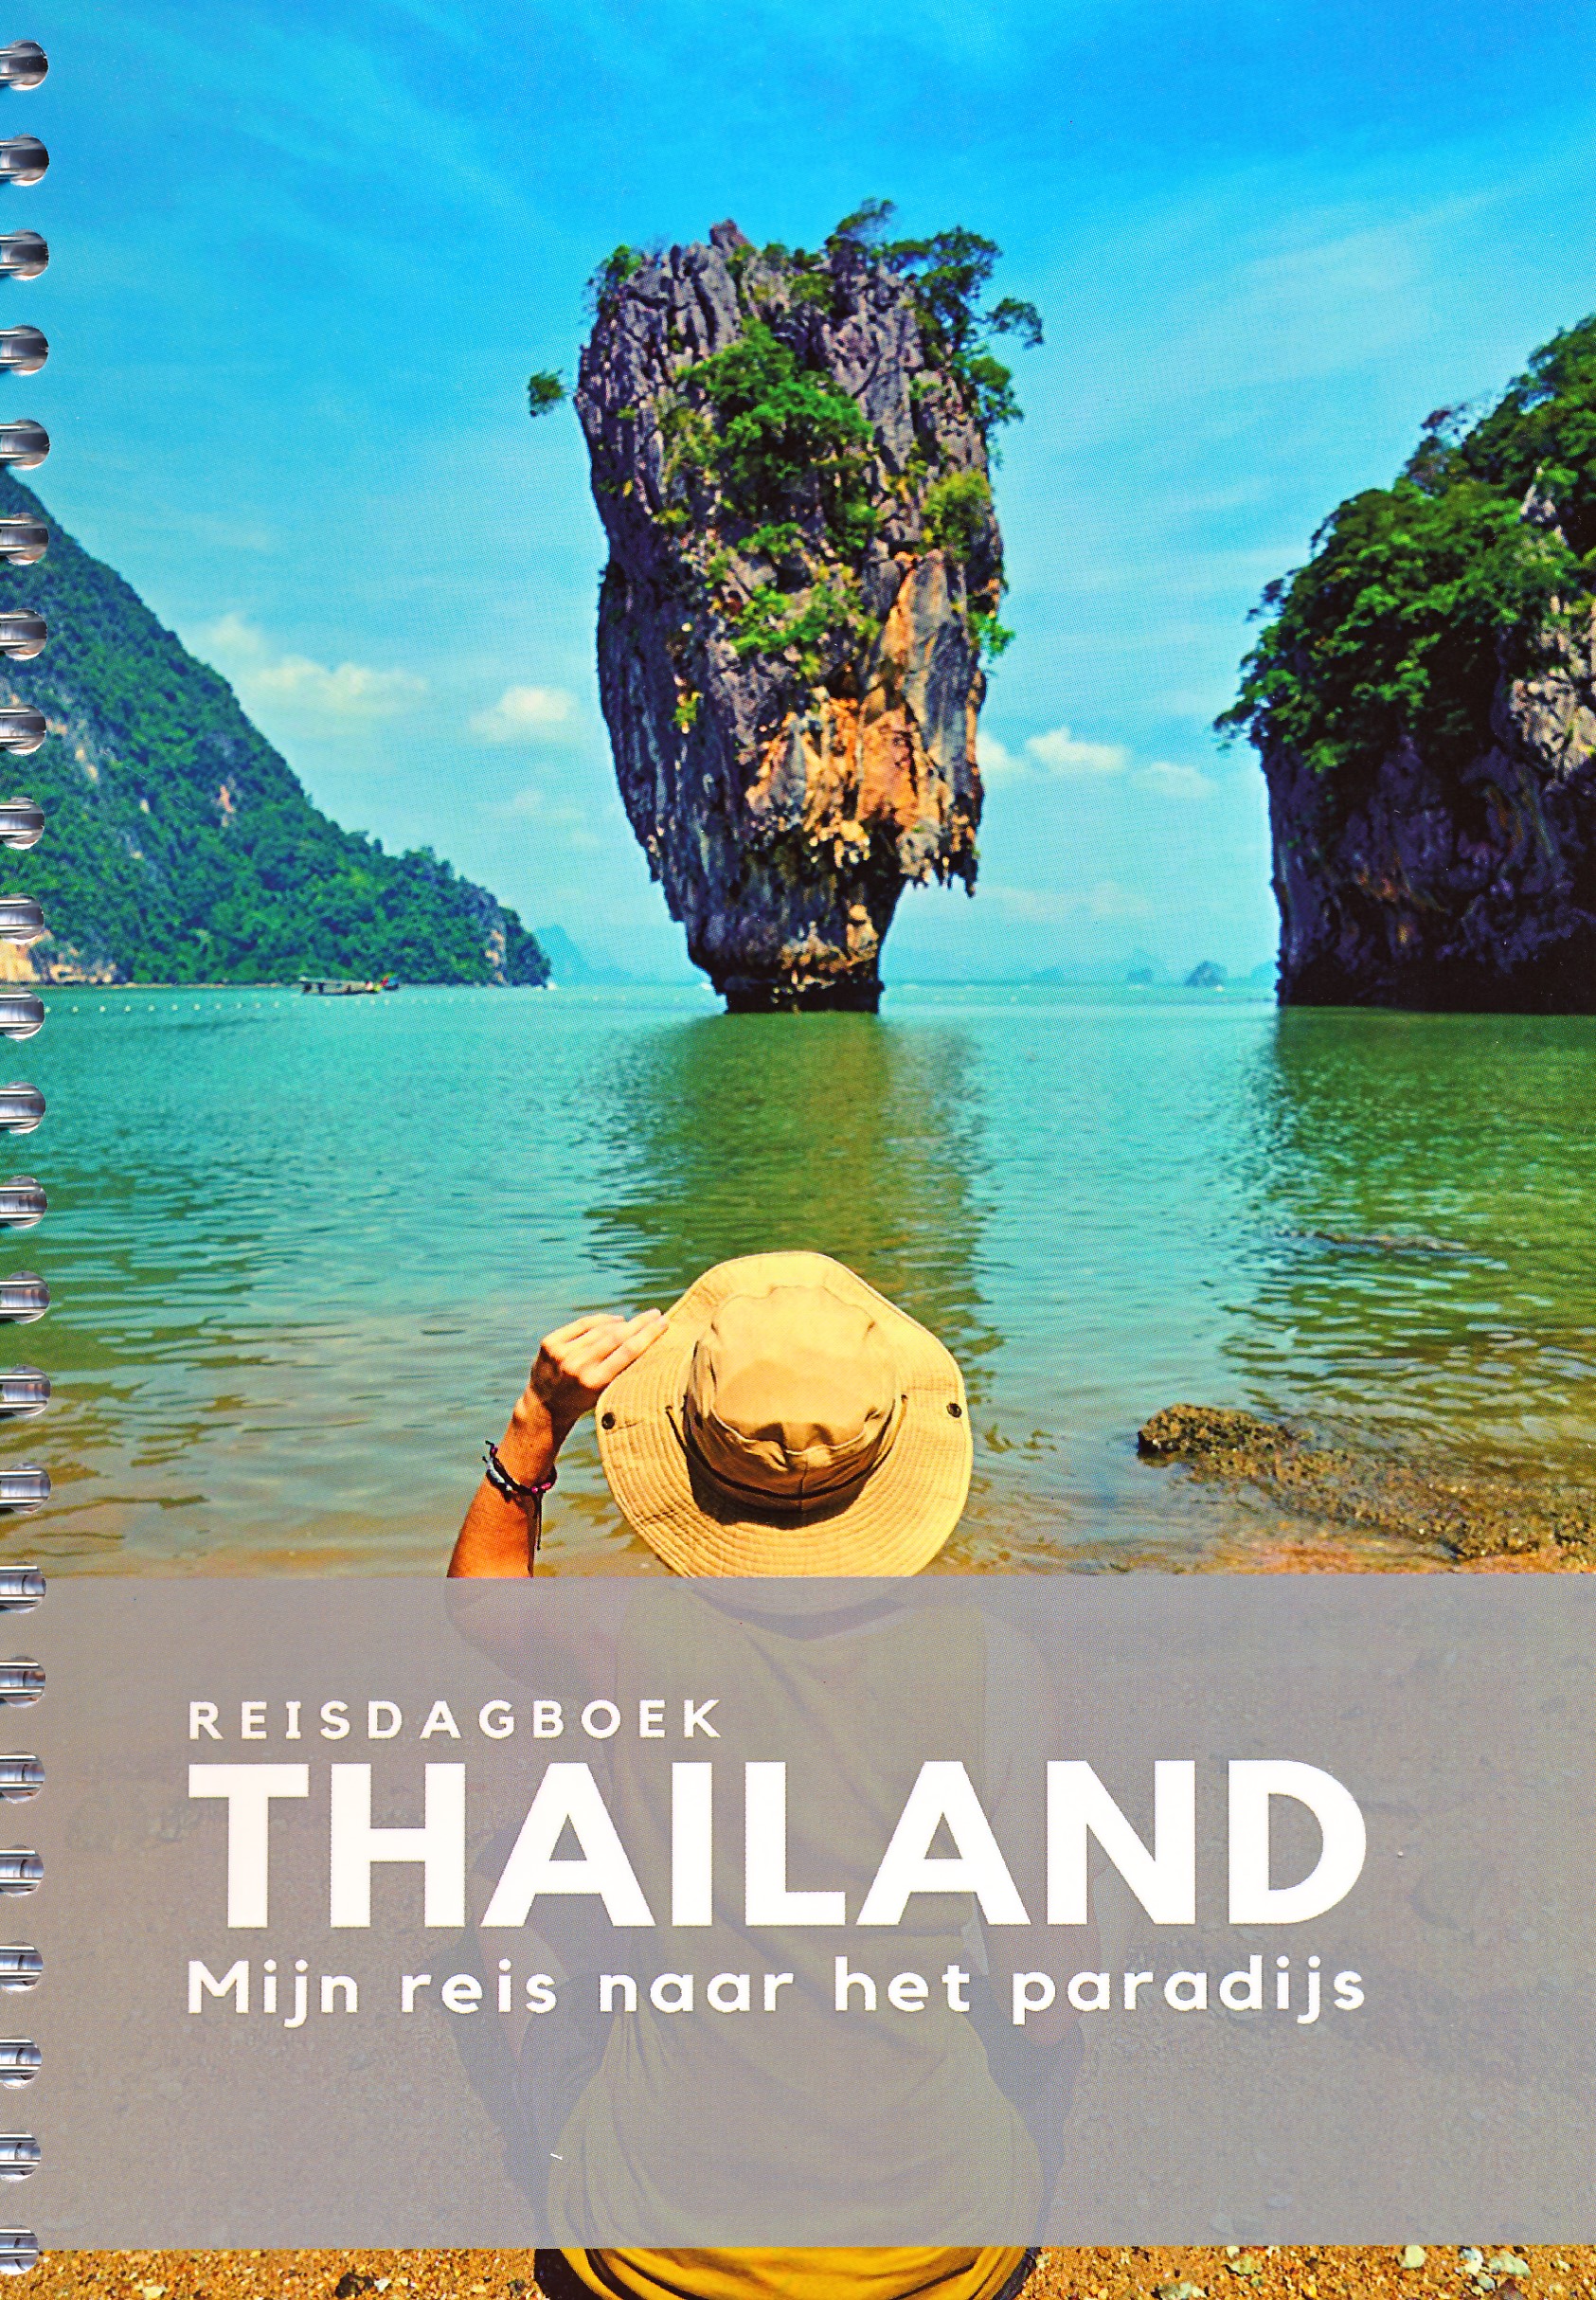 Online bestellen: Reisdagboek Thailand | Perky Publishers